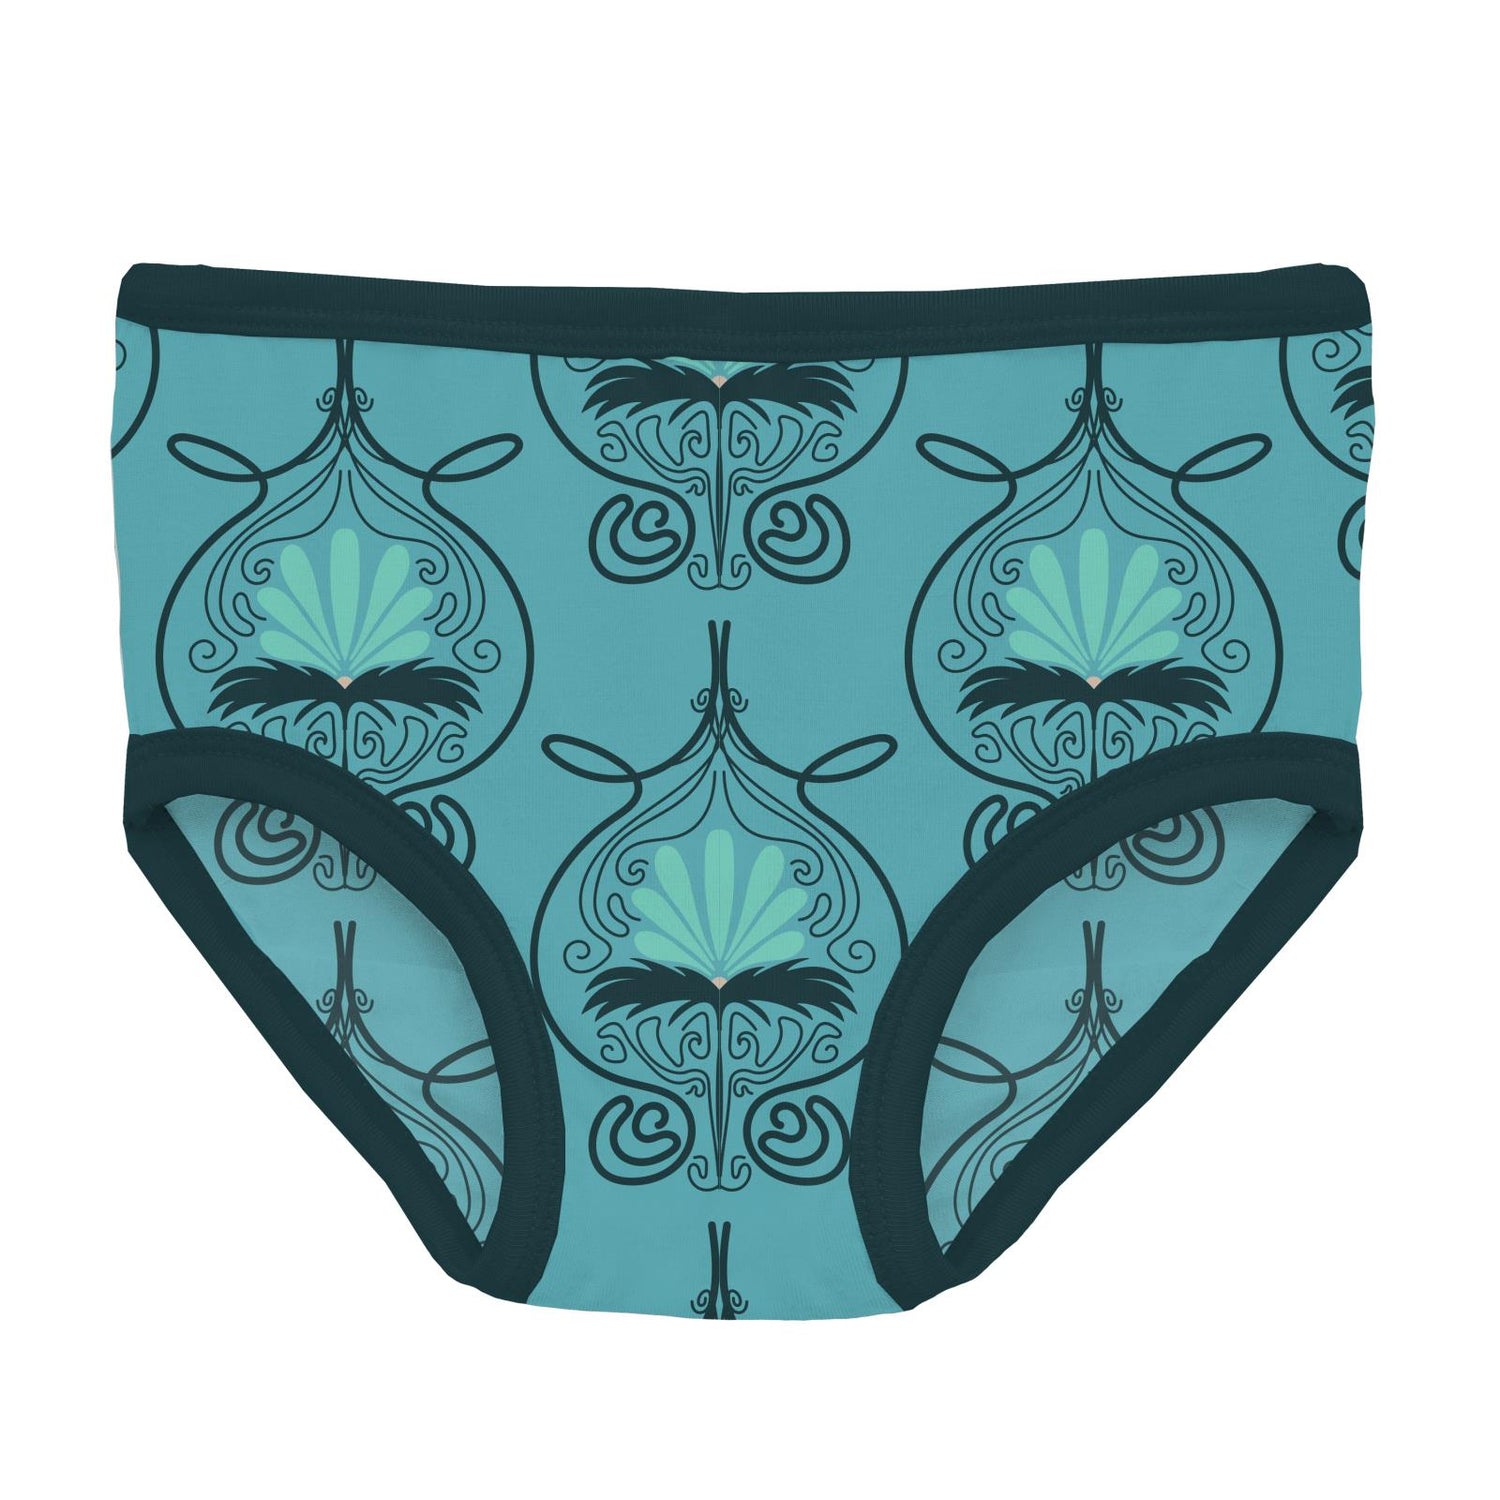 Print Girl's Underwear in Art Nouveau Floral